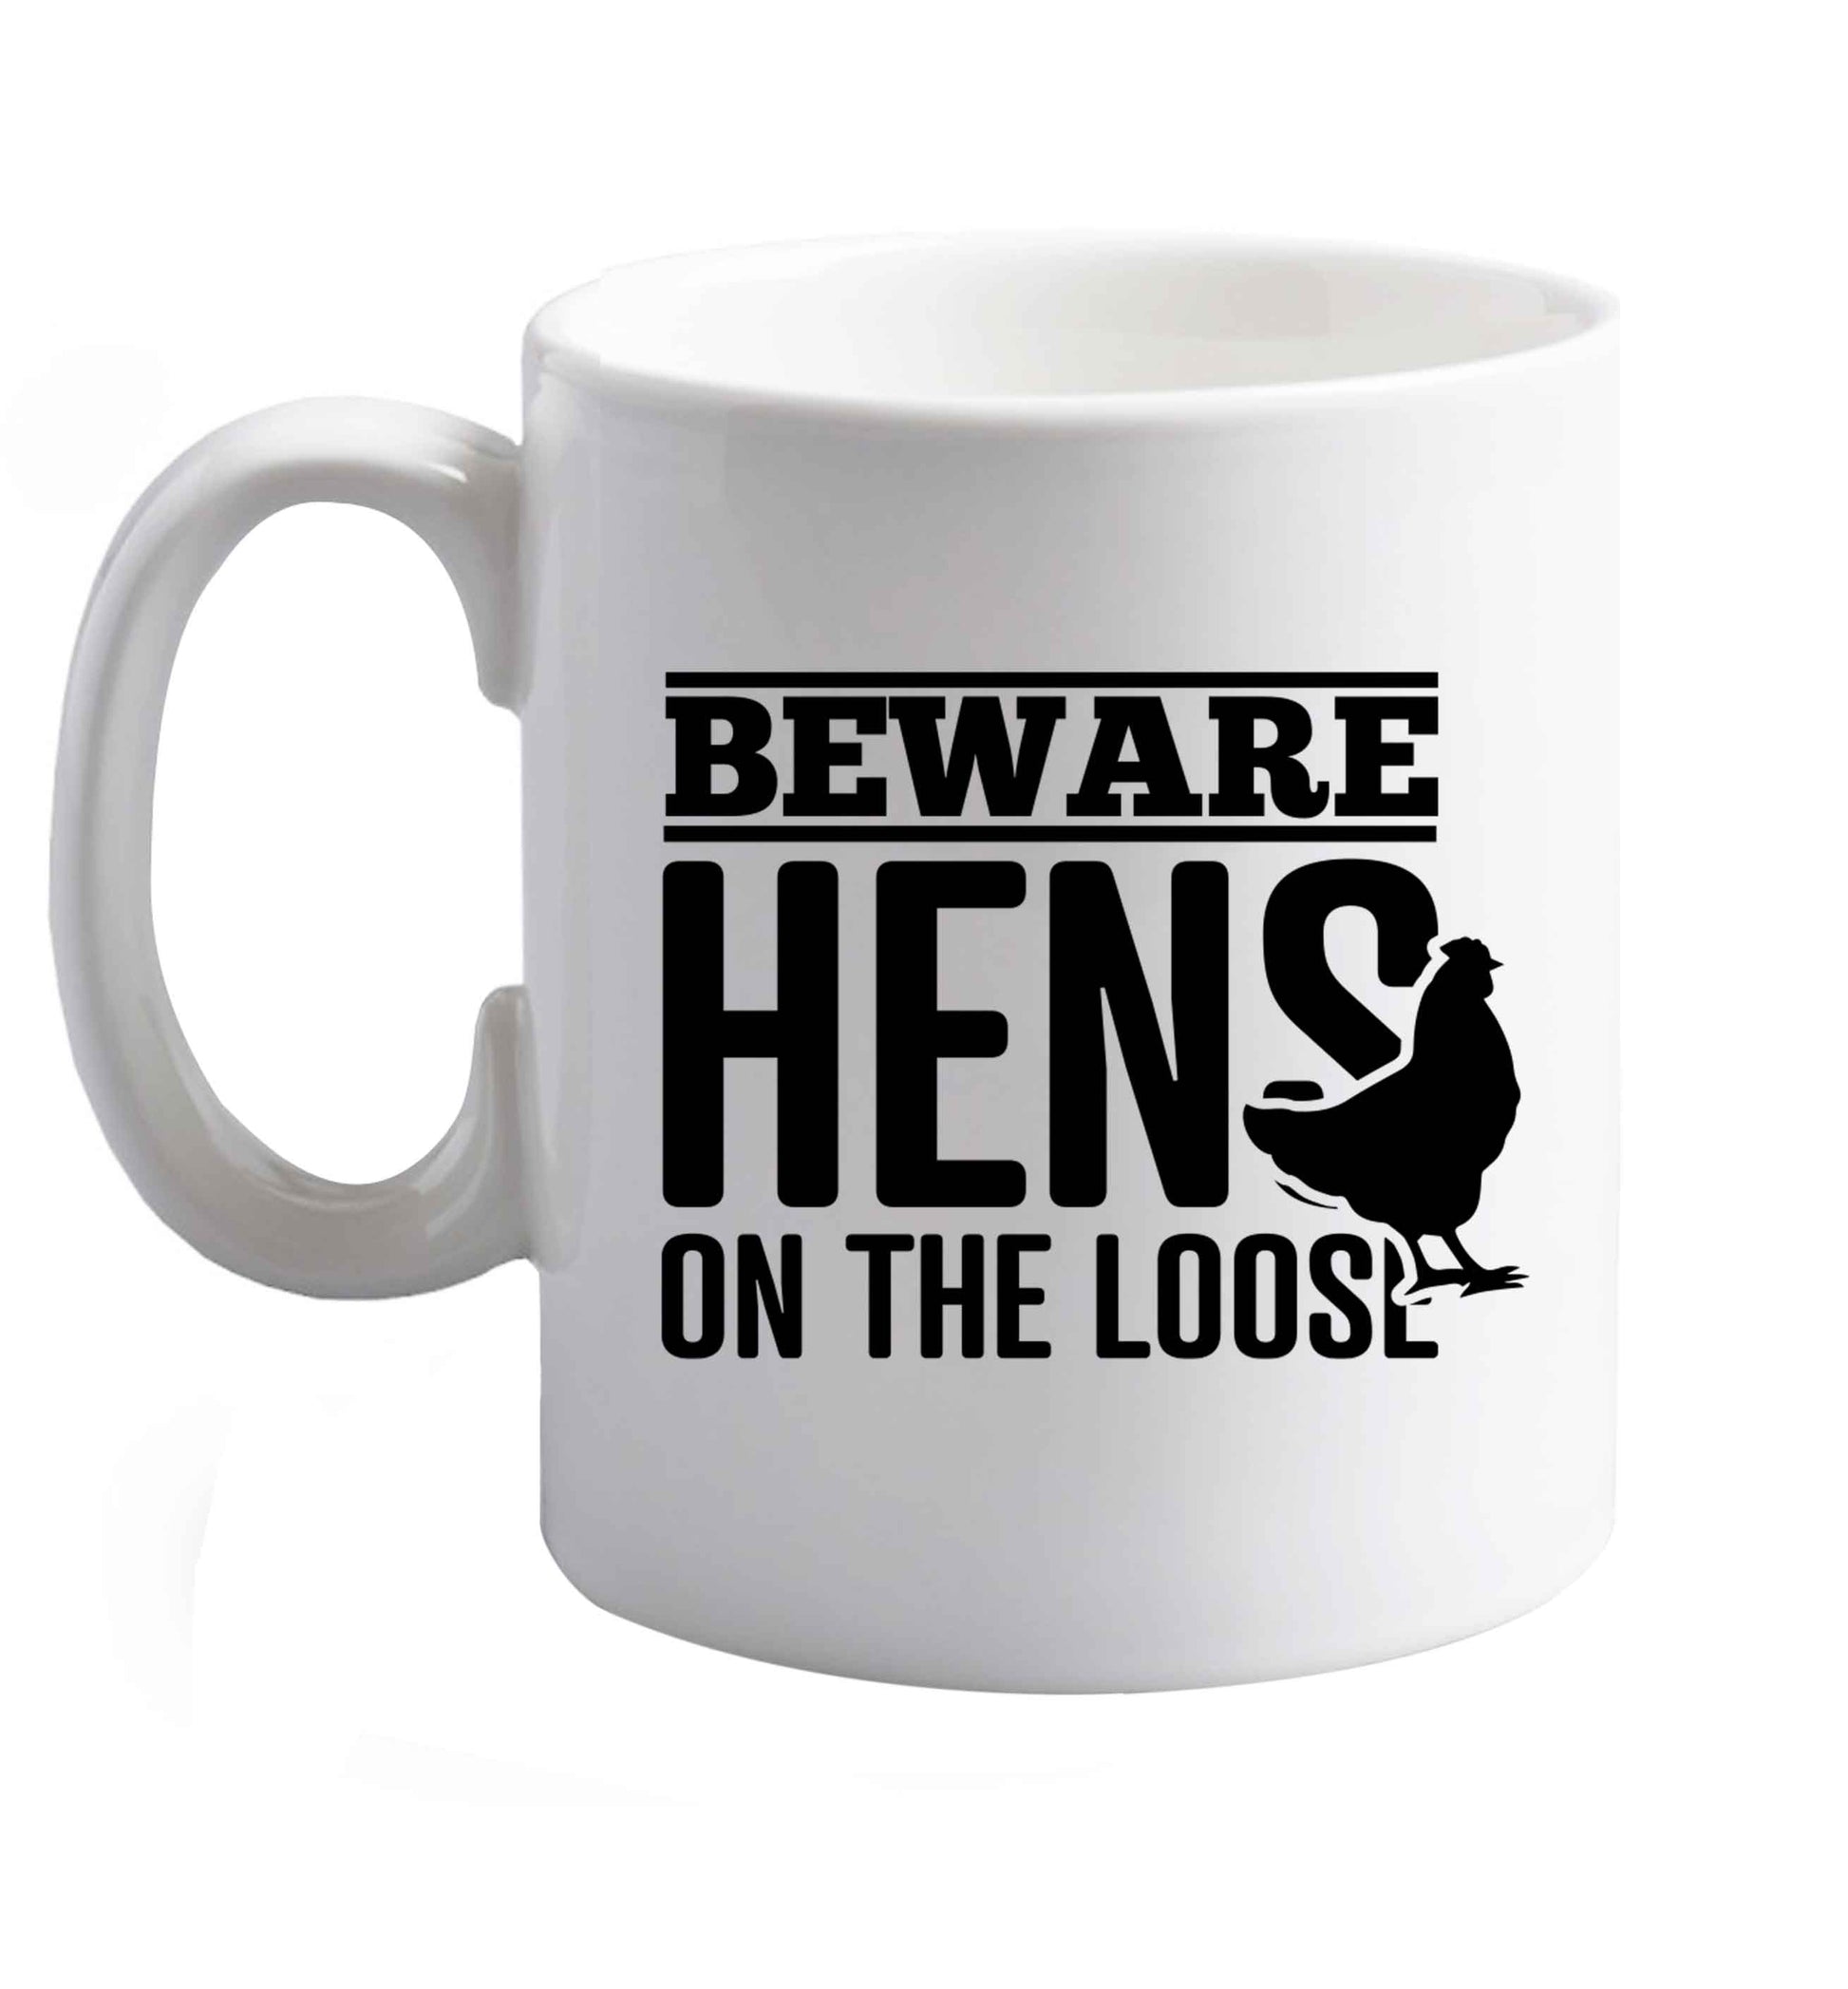 10 oz Beware hens on the loose   ceramic mug right handed